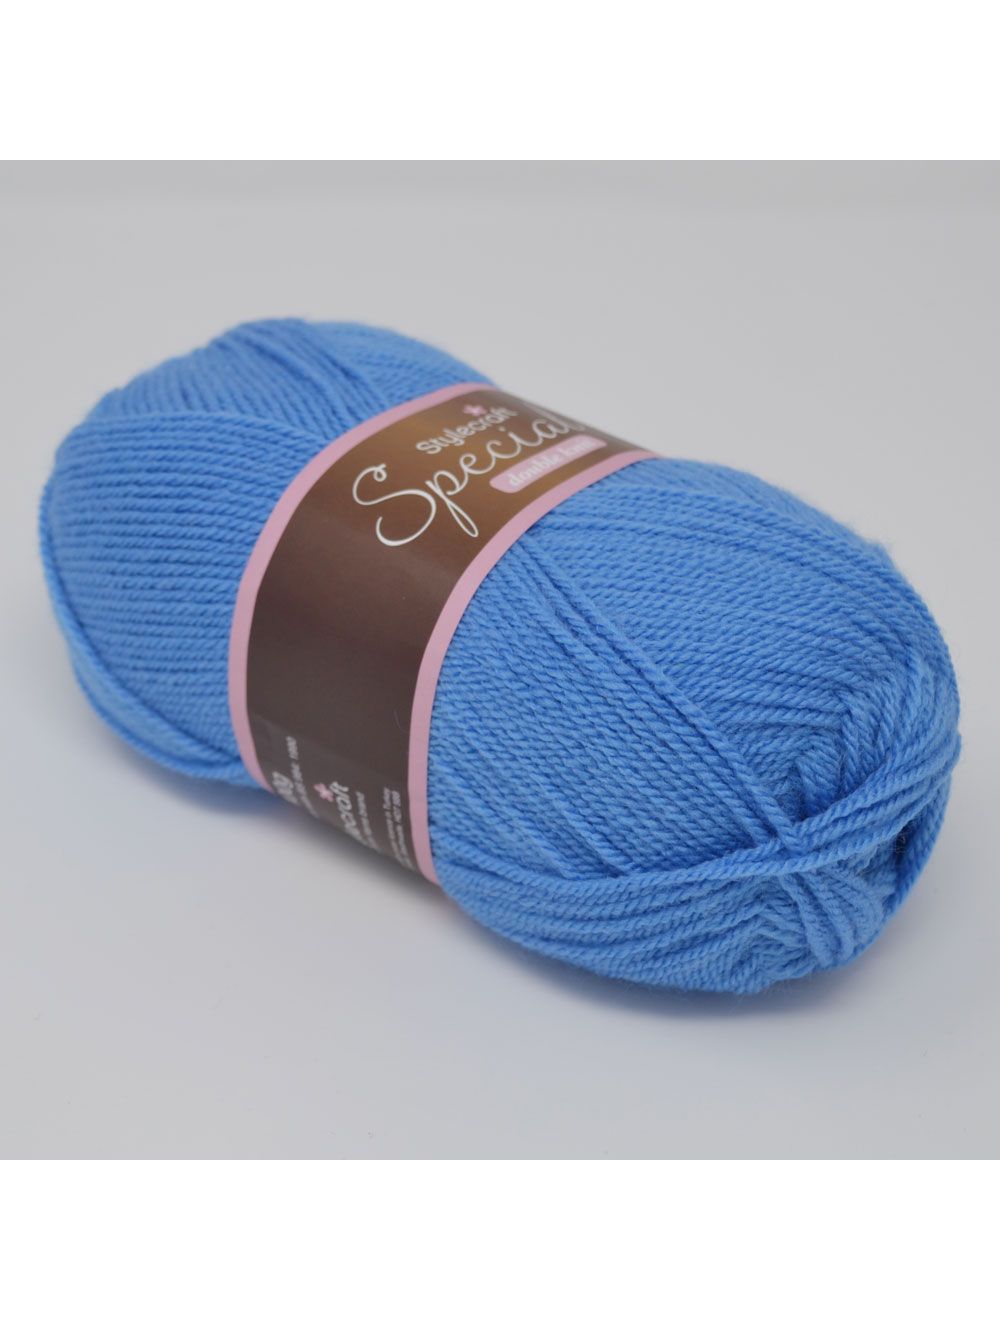 Stylecraft Special DK Knitting Wool Yarn 100g 1003 ASTER 